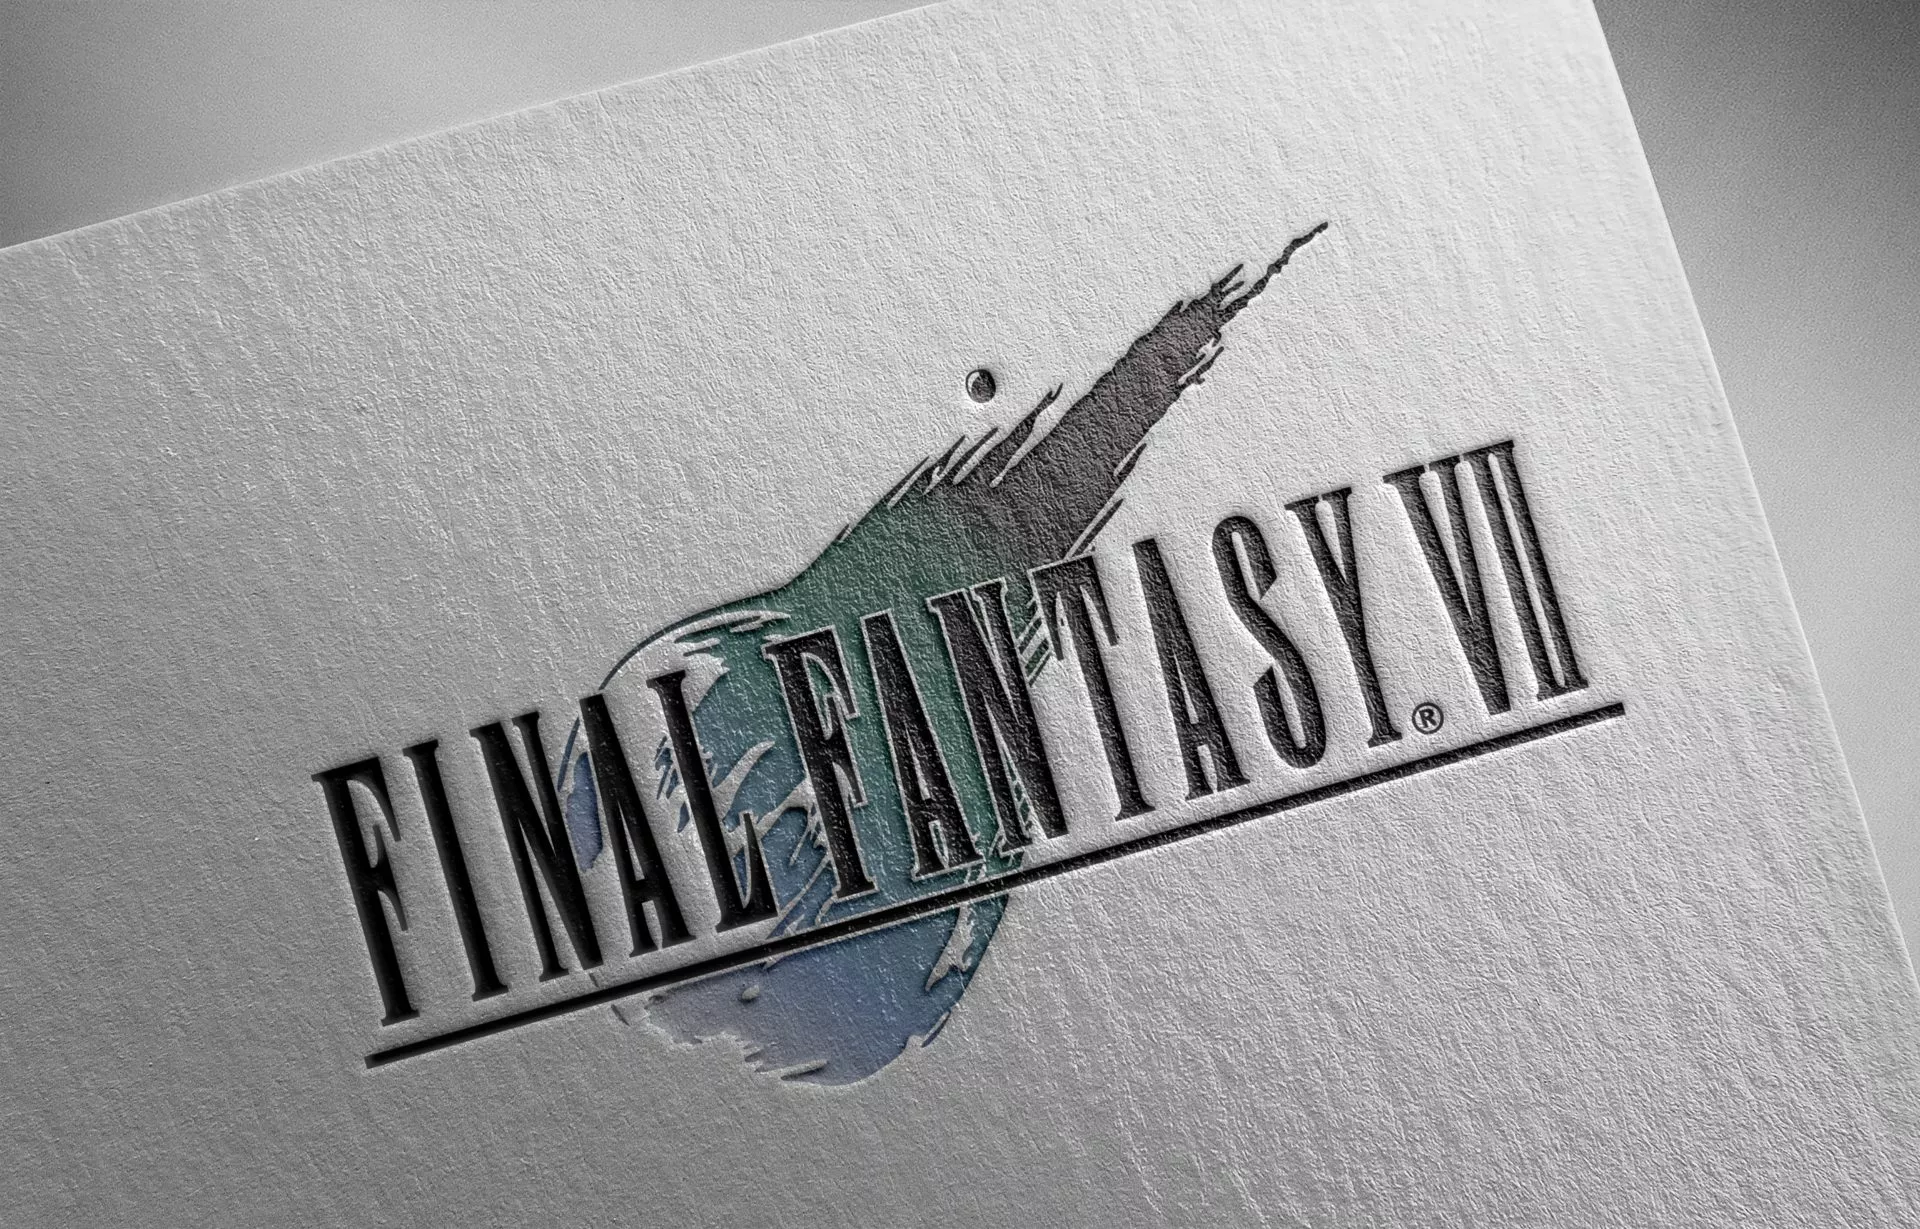 Final Fantasy VII Logo